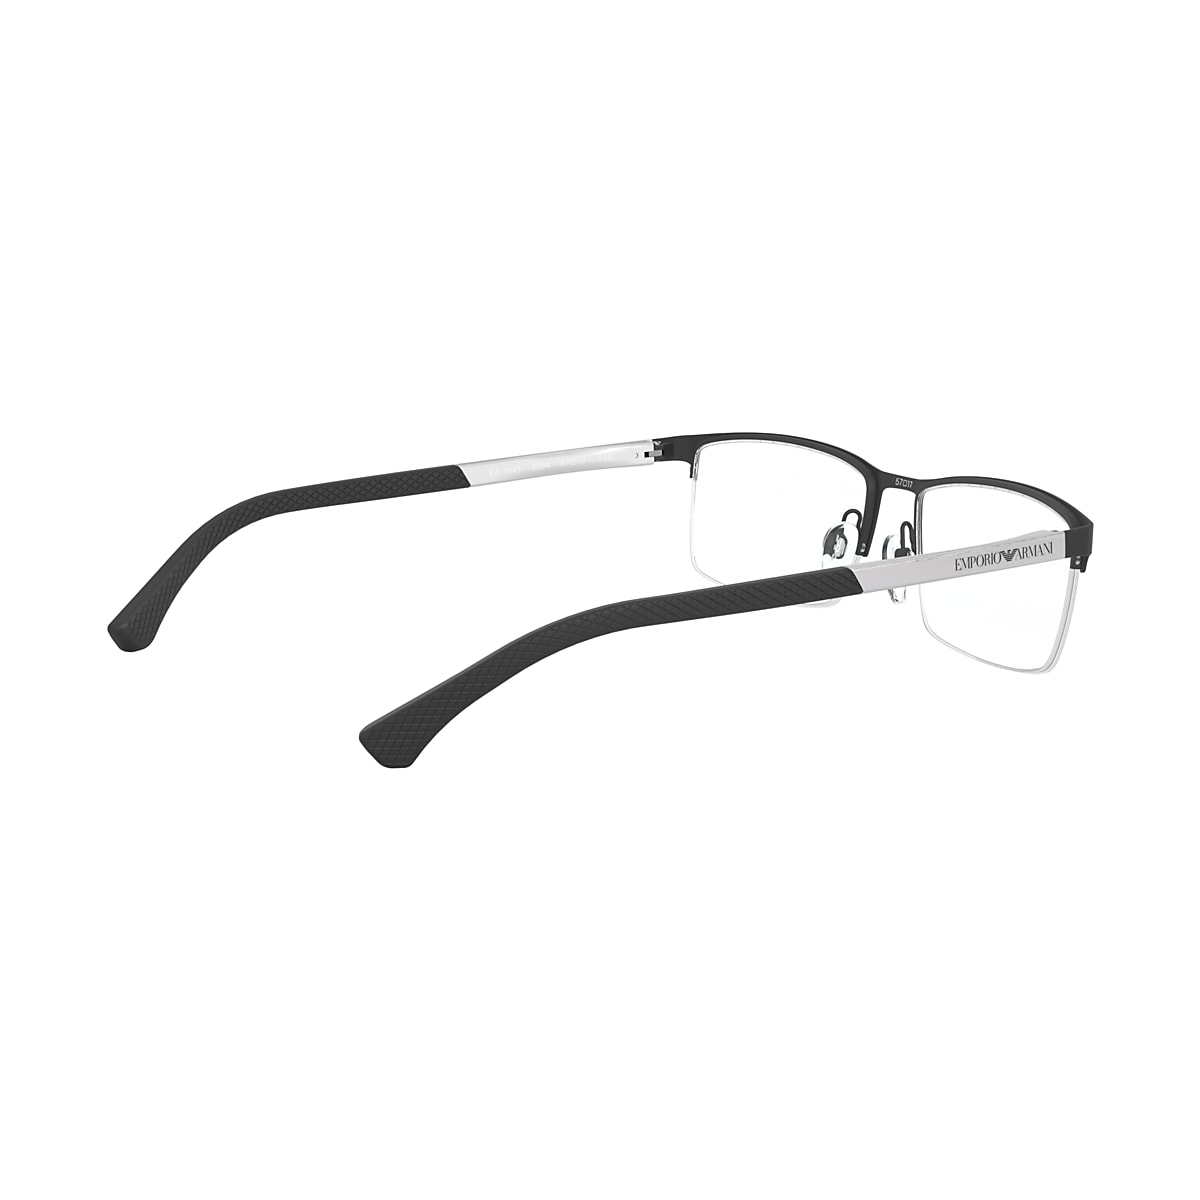 Emporio Armani 0EA1041 Glasses in Black | Target Optical